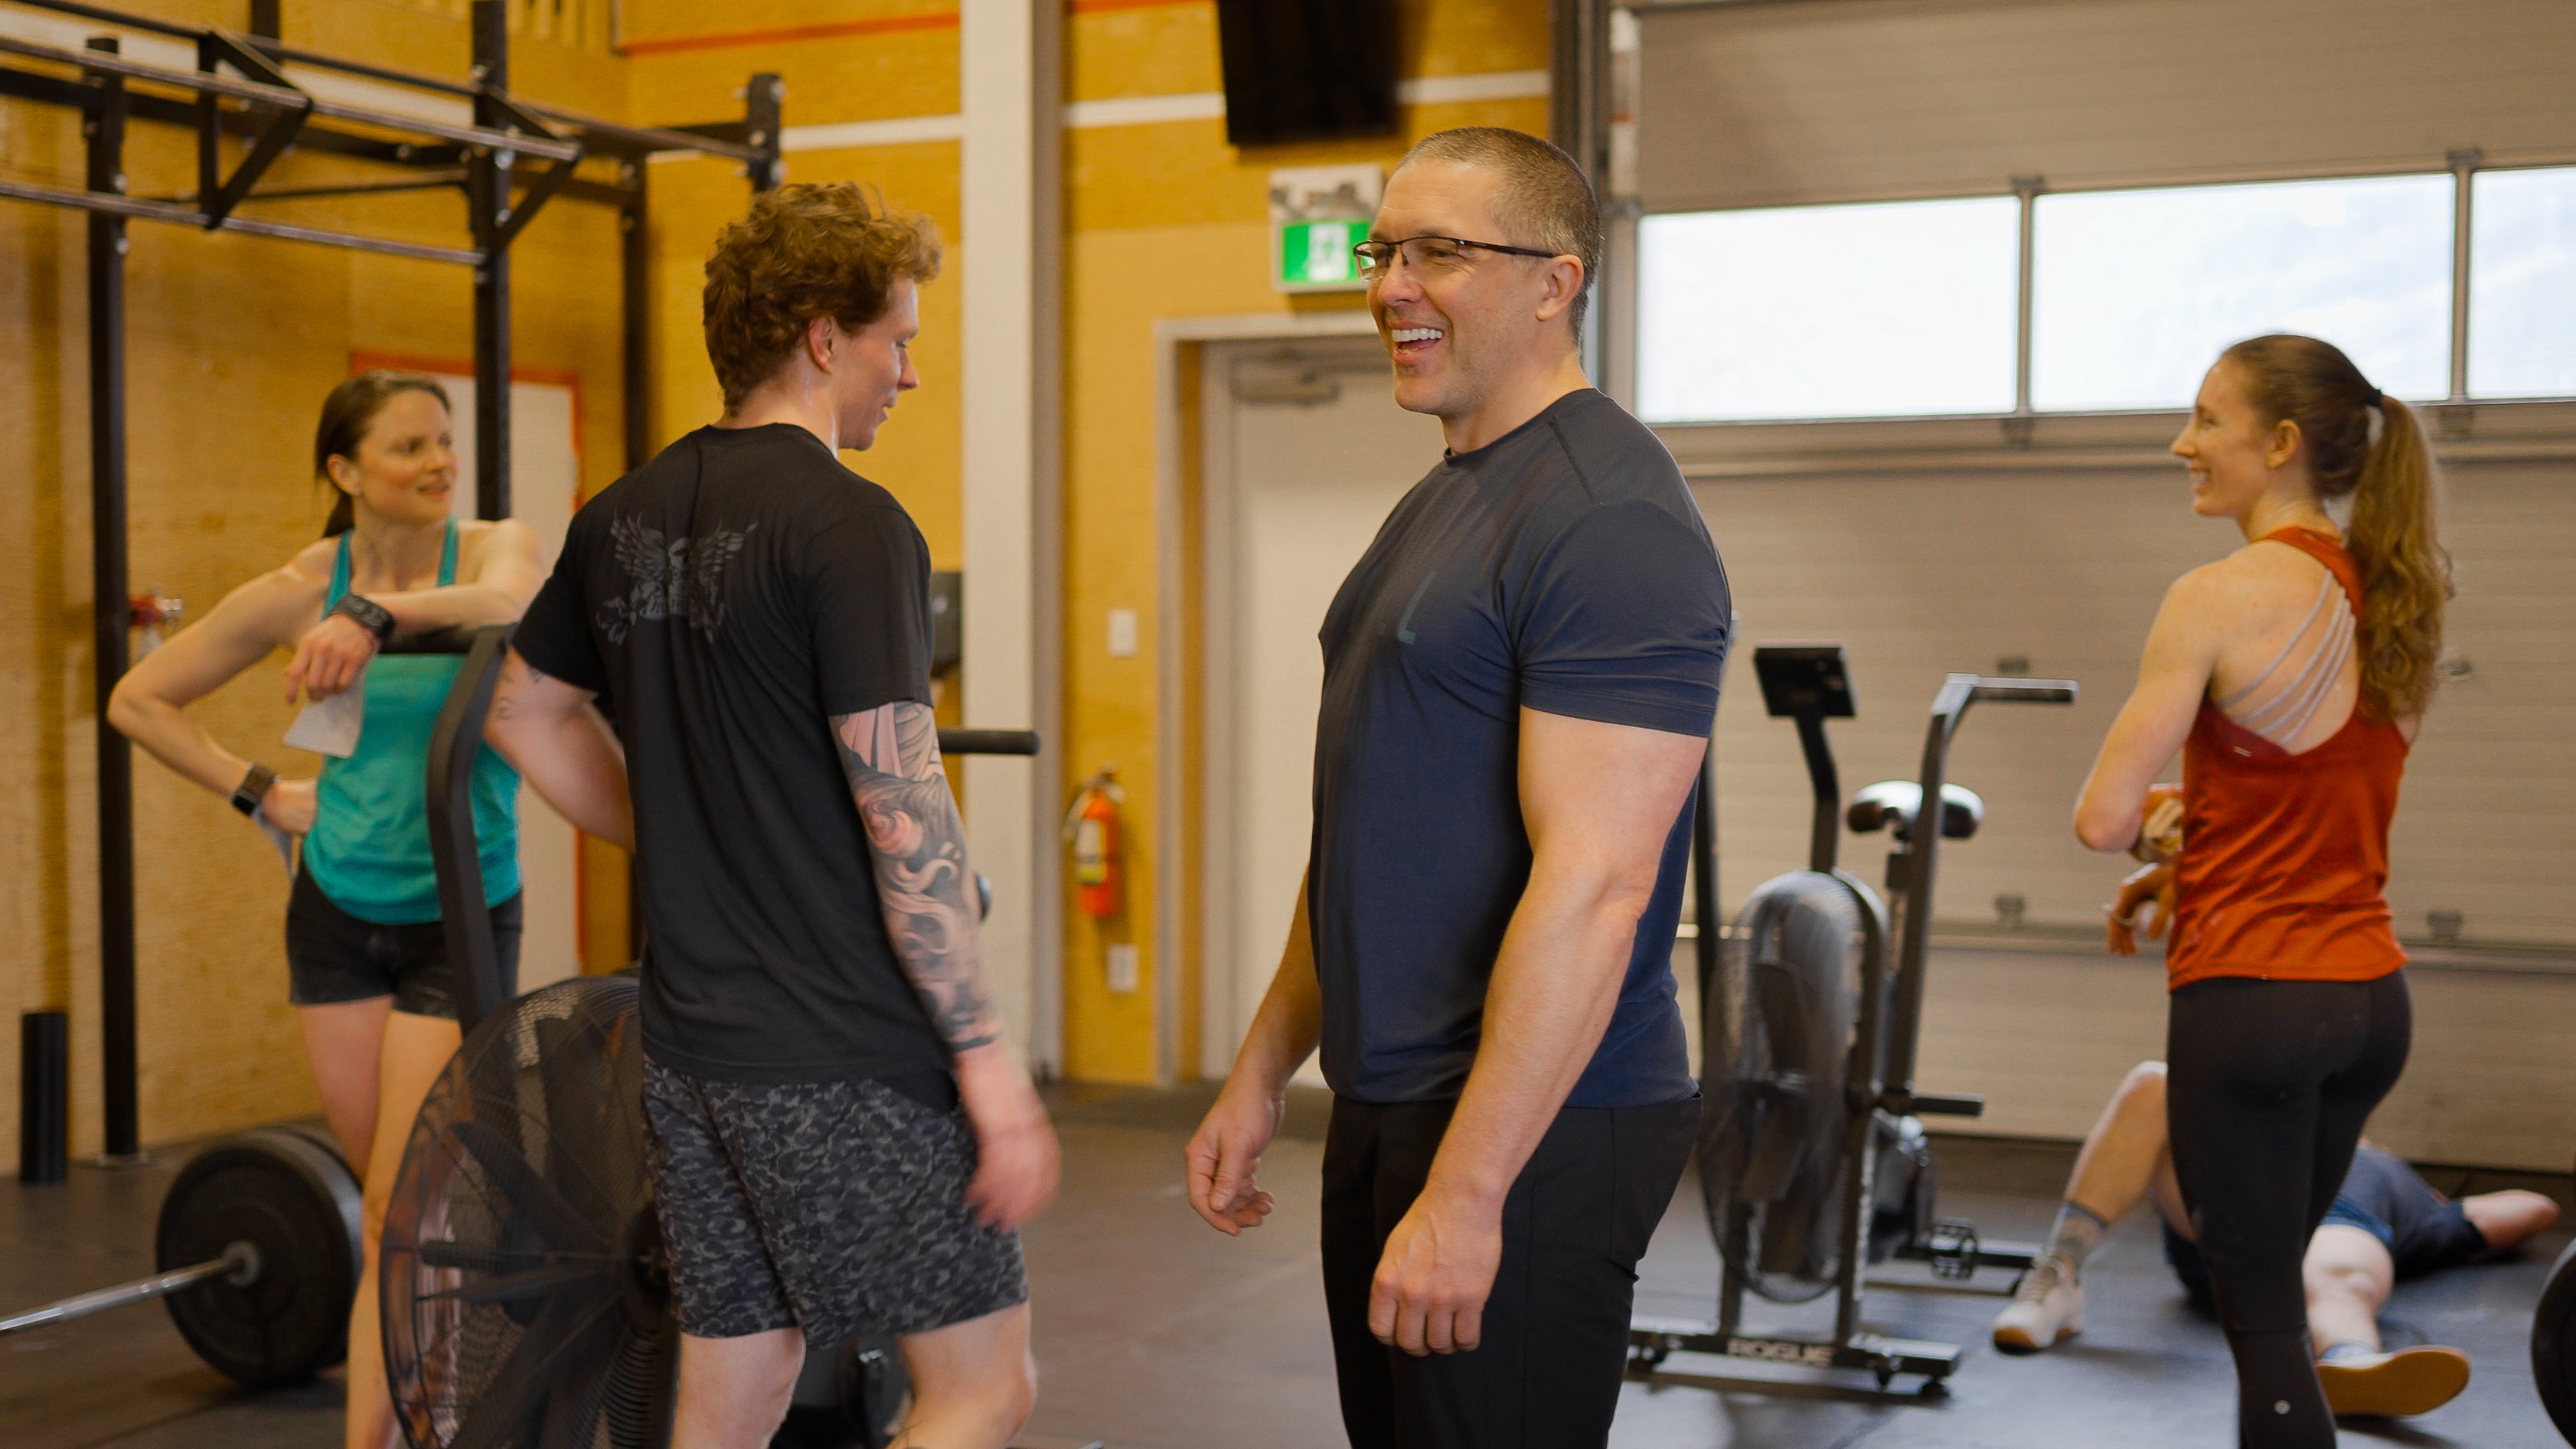 People enjoying conversation in a CrossFit gym